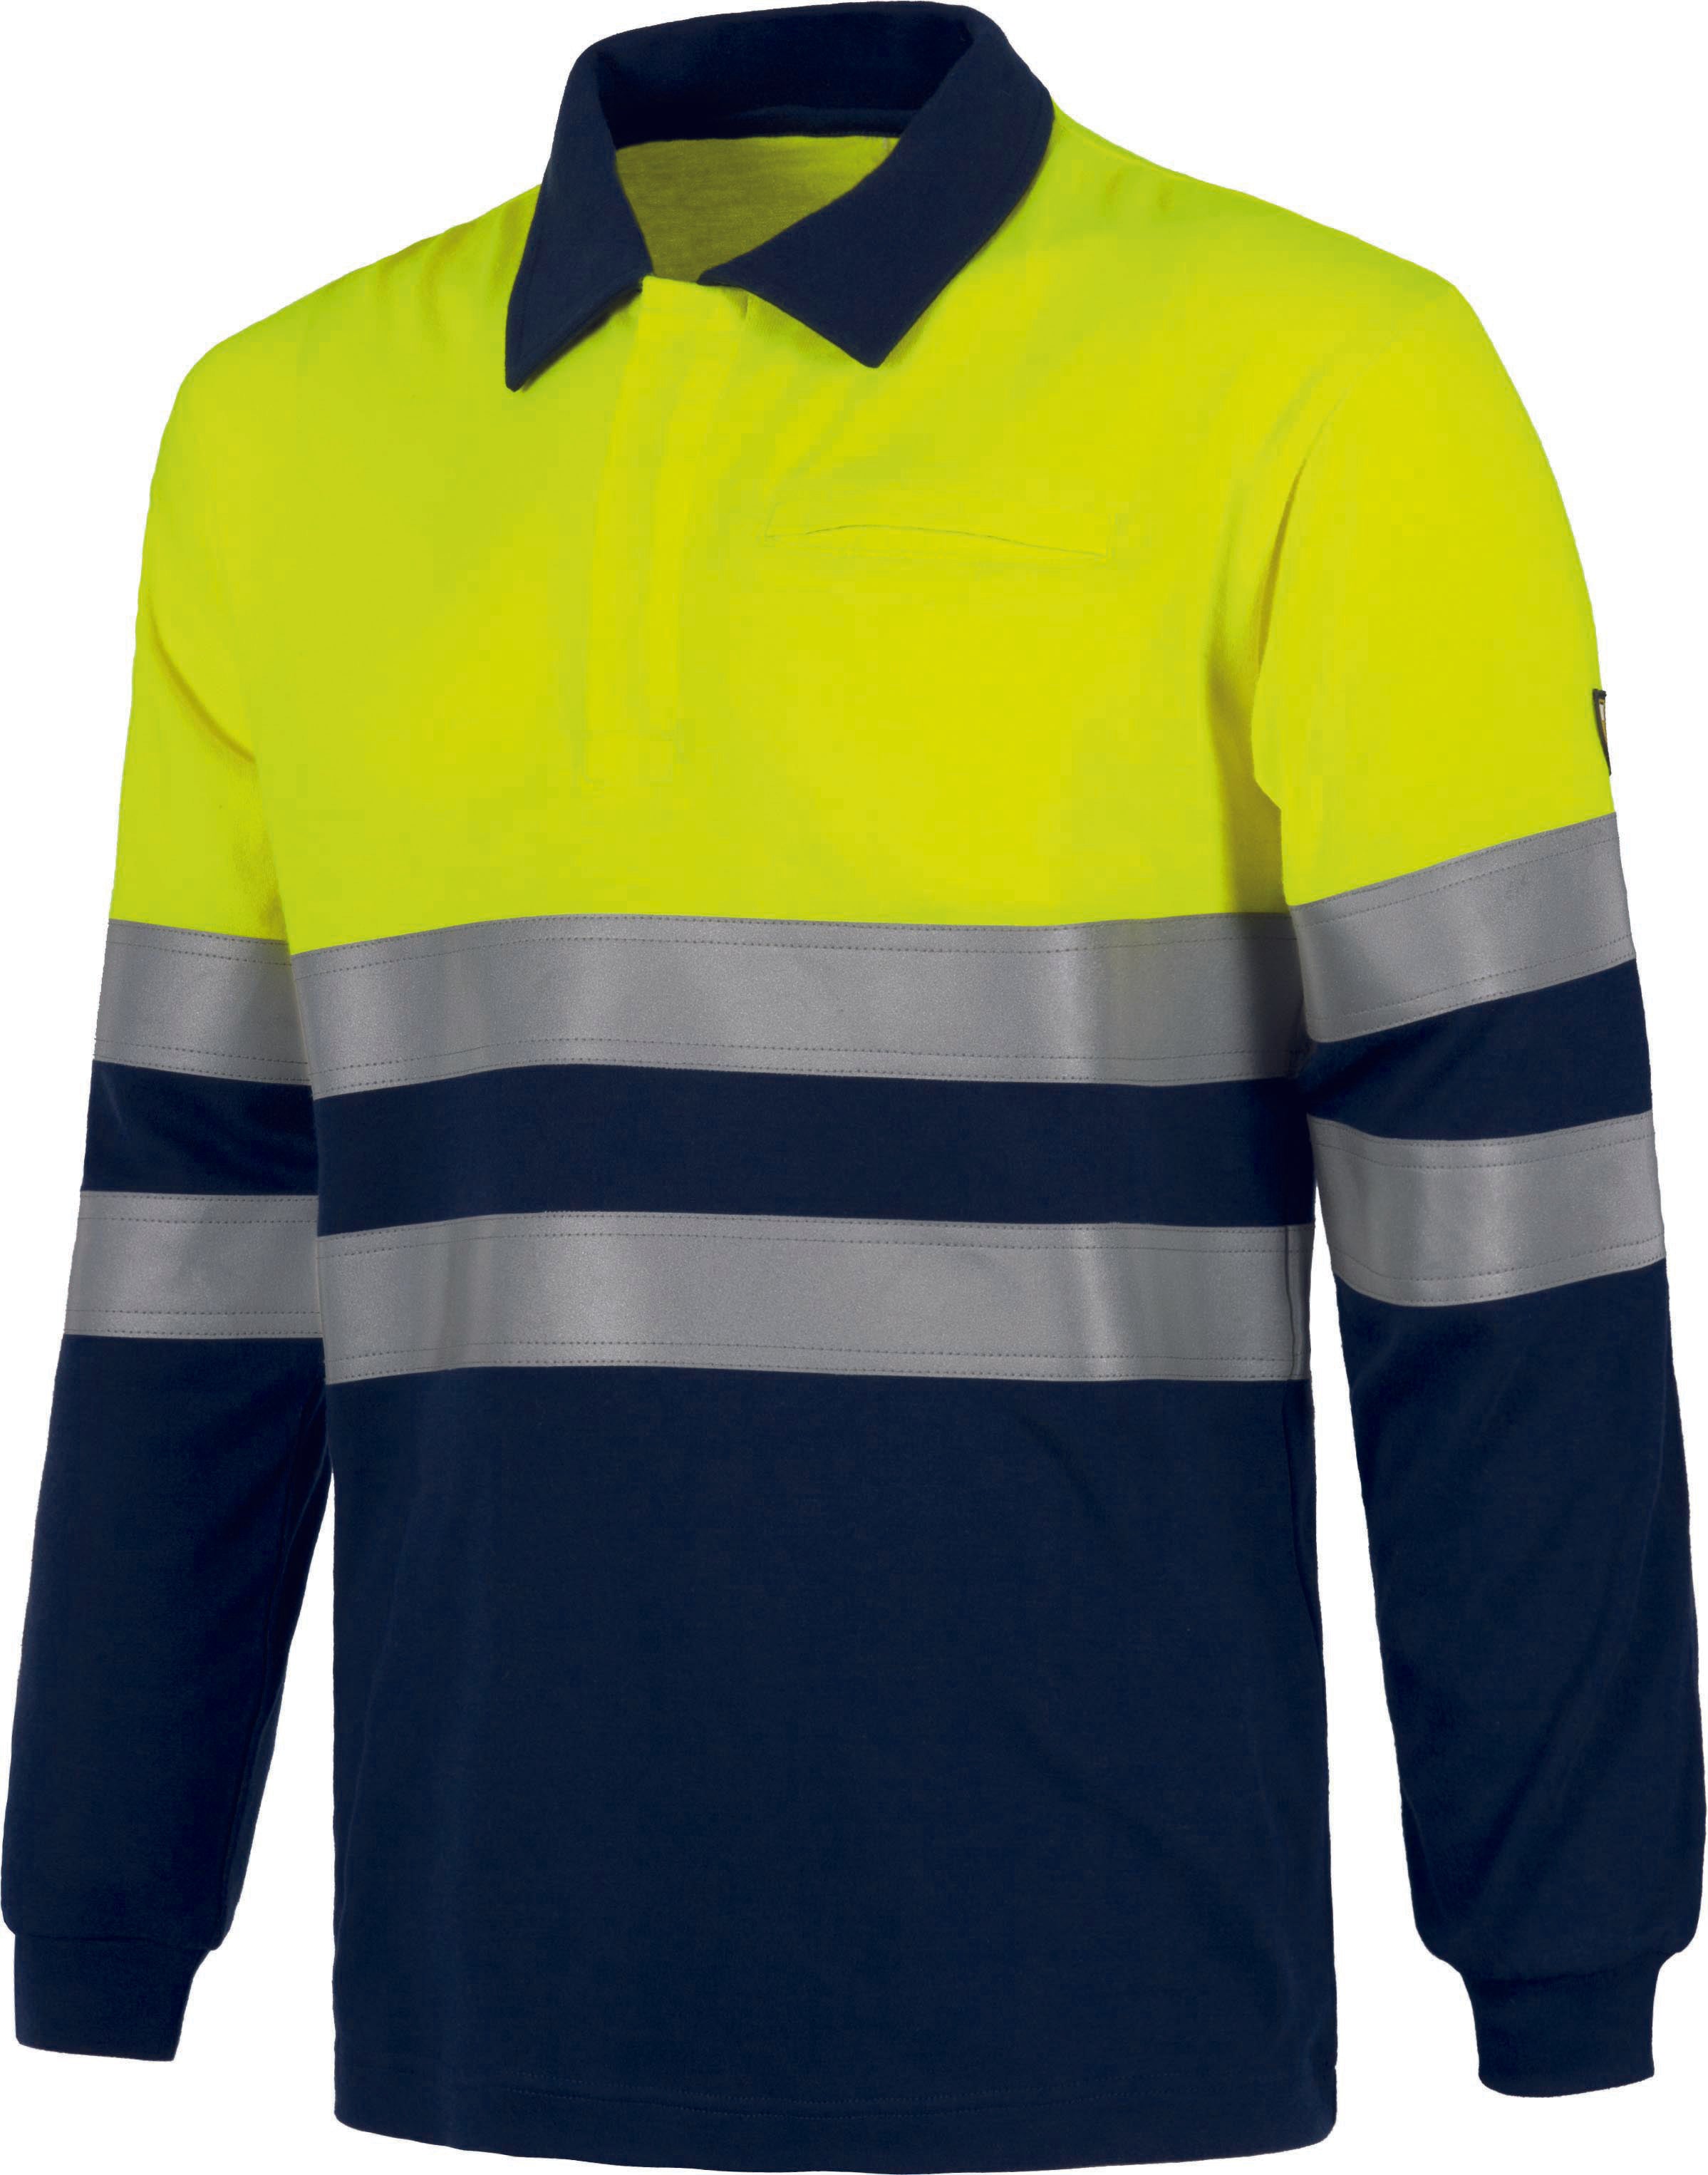 Bi-Colour Long Sleeve Polo Shirts with high Visibility Stripes (EU Compliant)